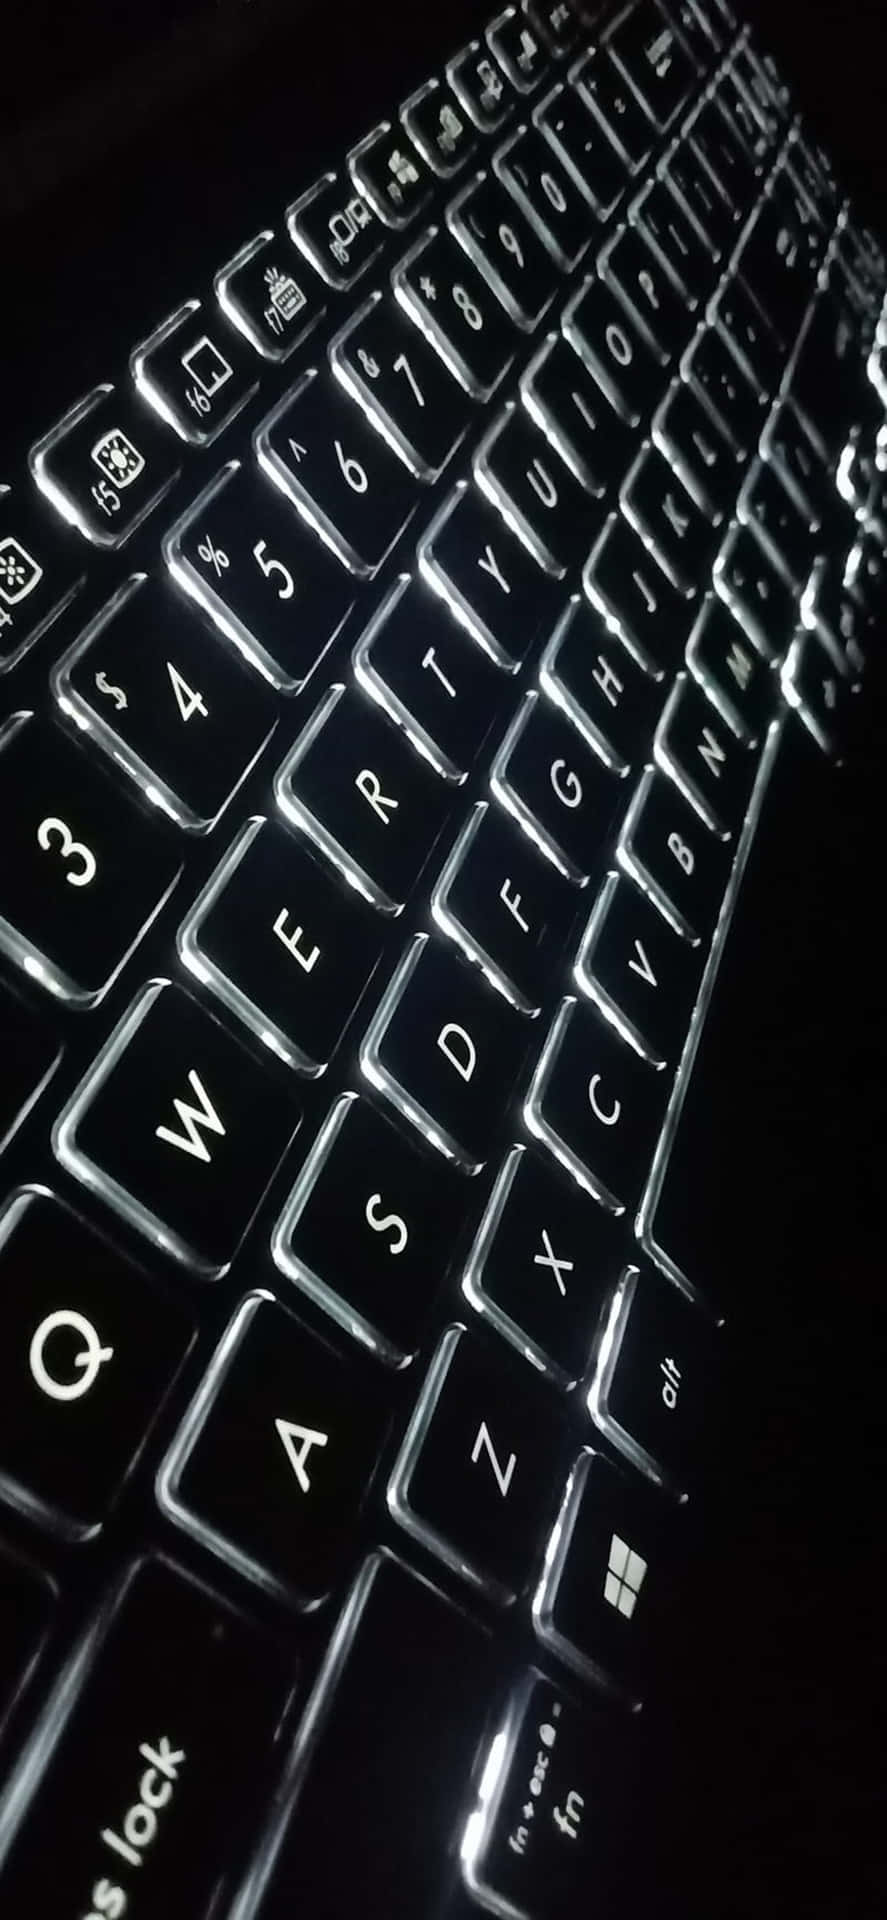 Wallpaper Black Ipad on White Computer Keyboard Background  Download Free  Image